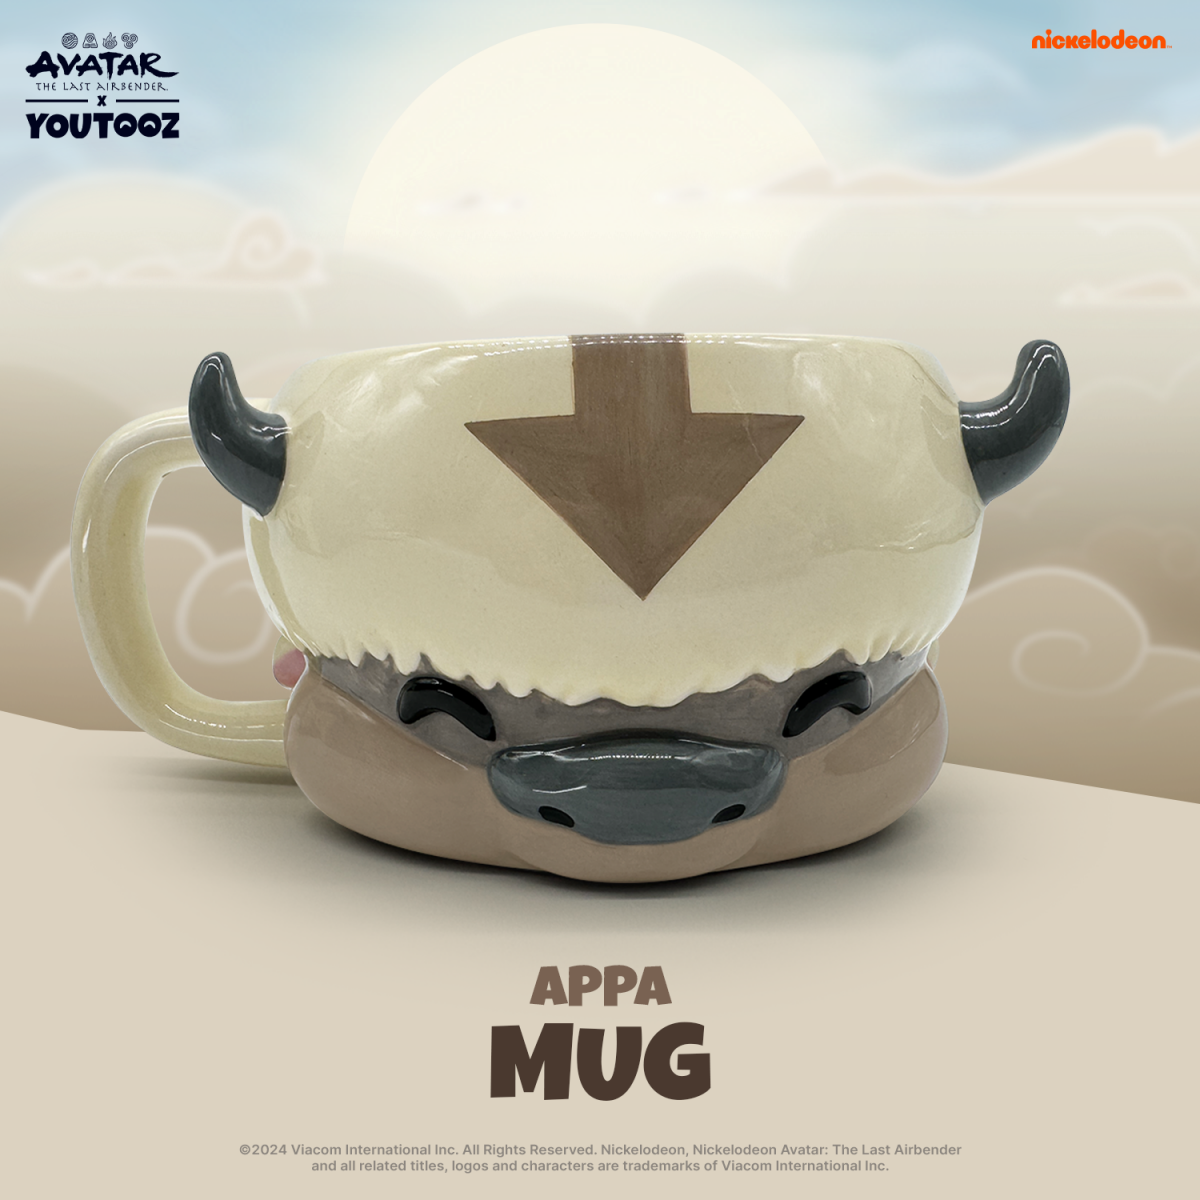 Avatar the last airbender new Youtooz line, Appa Mug